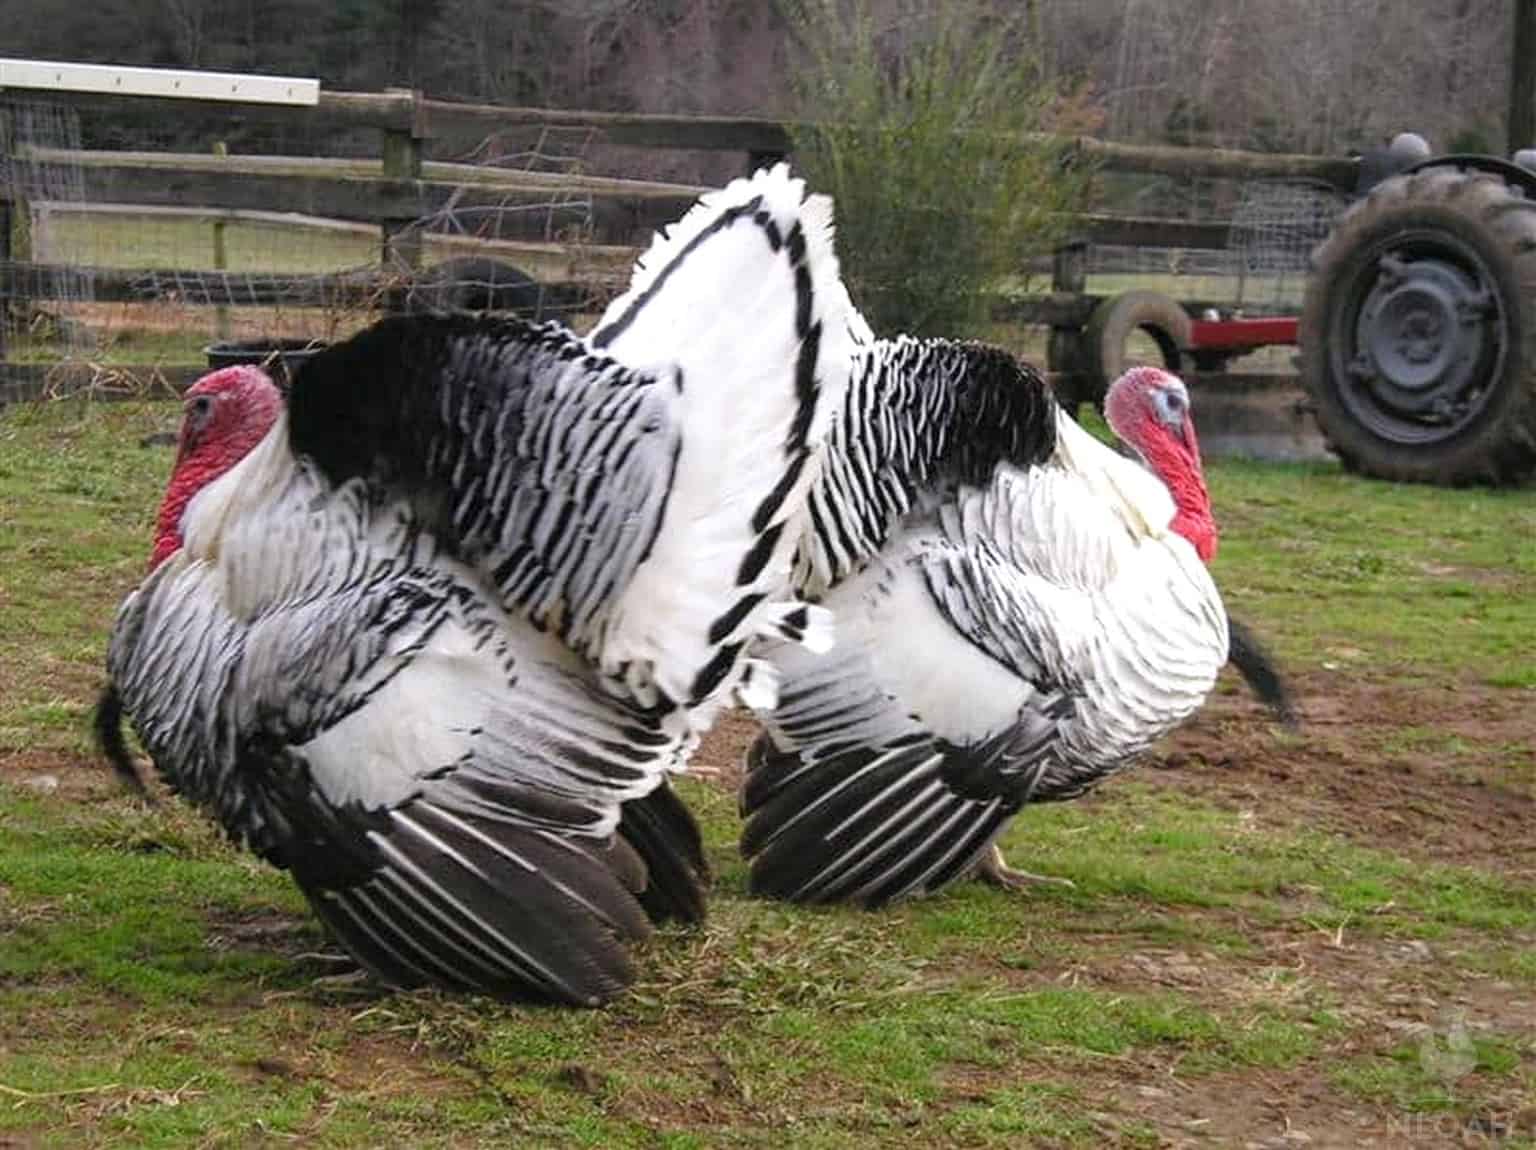 two Royal Palm turkeys